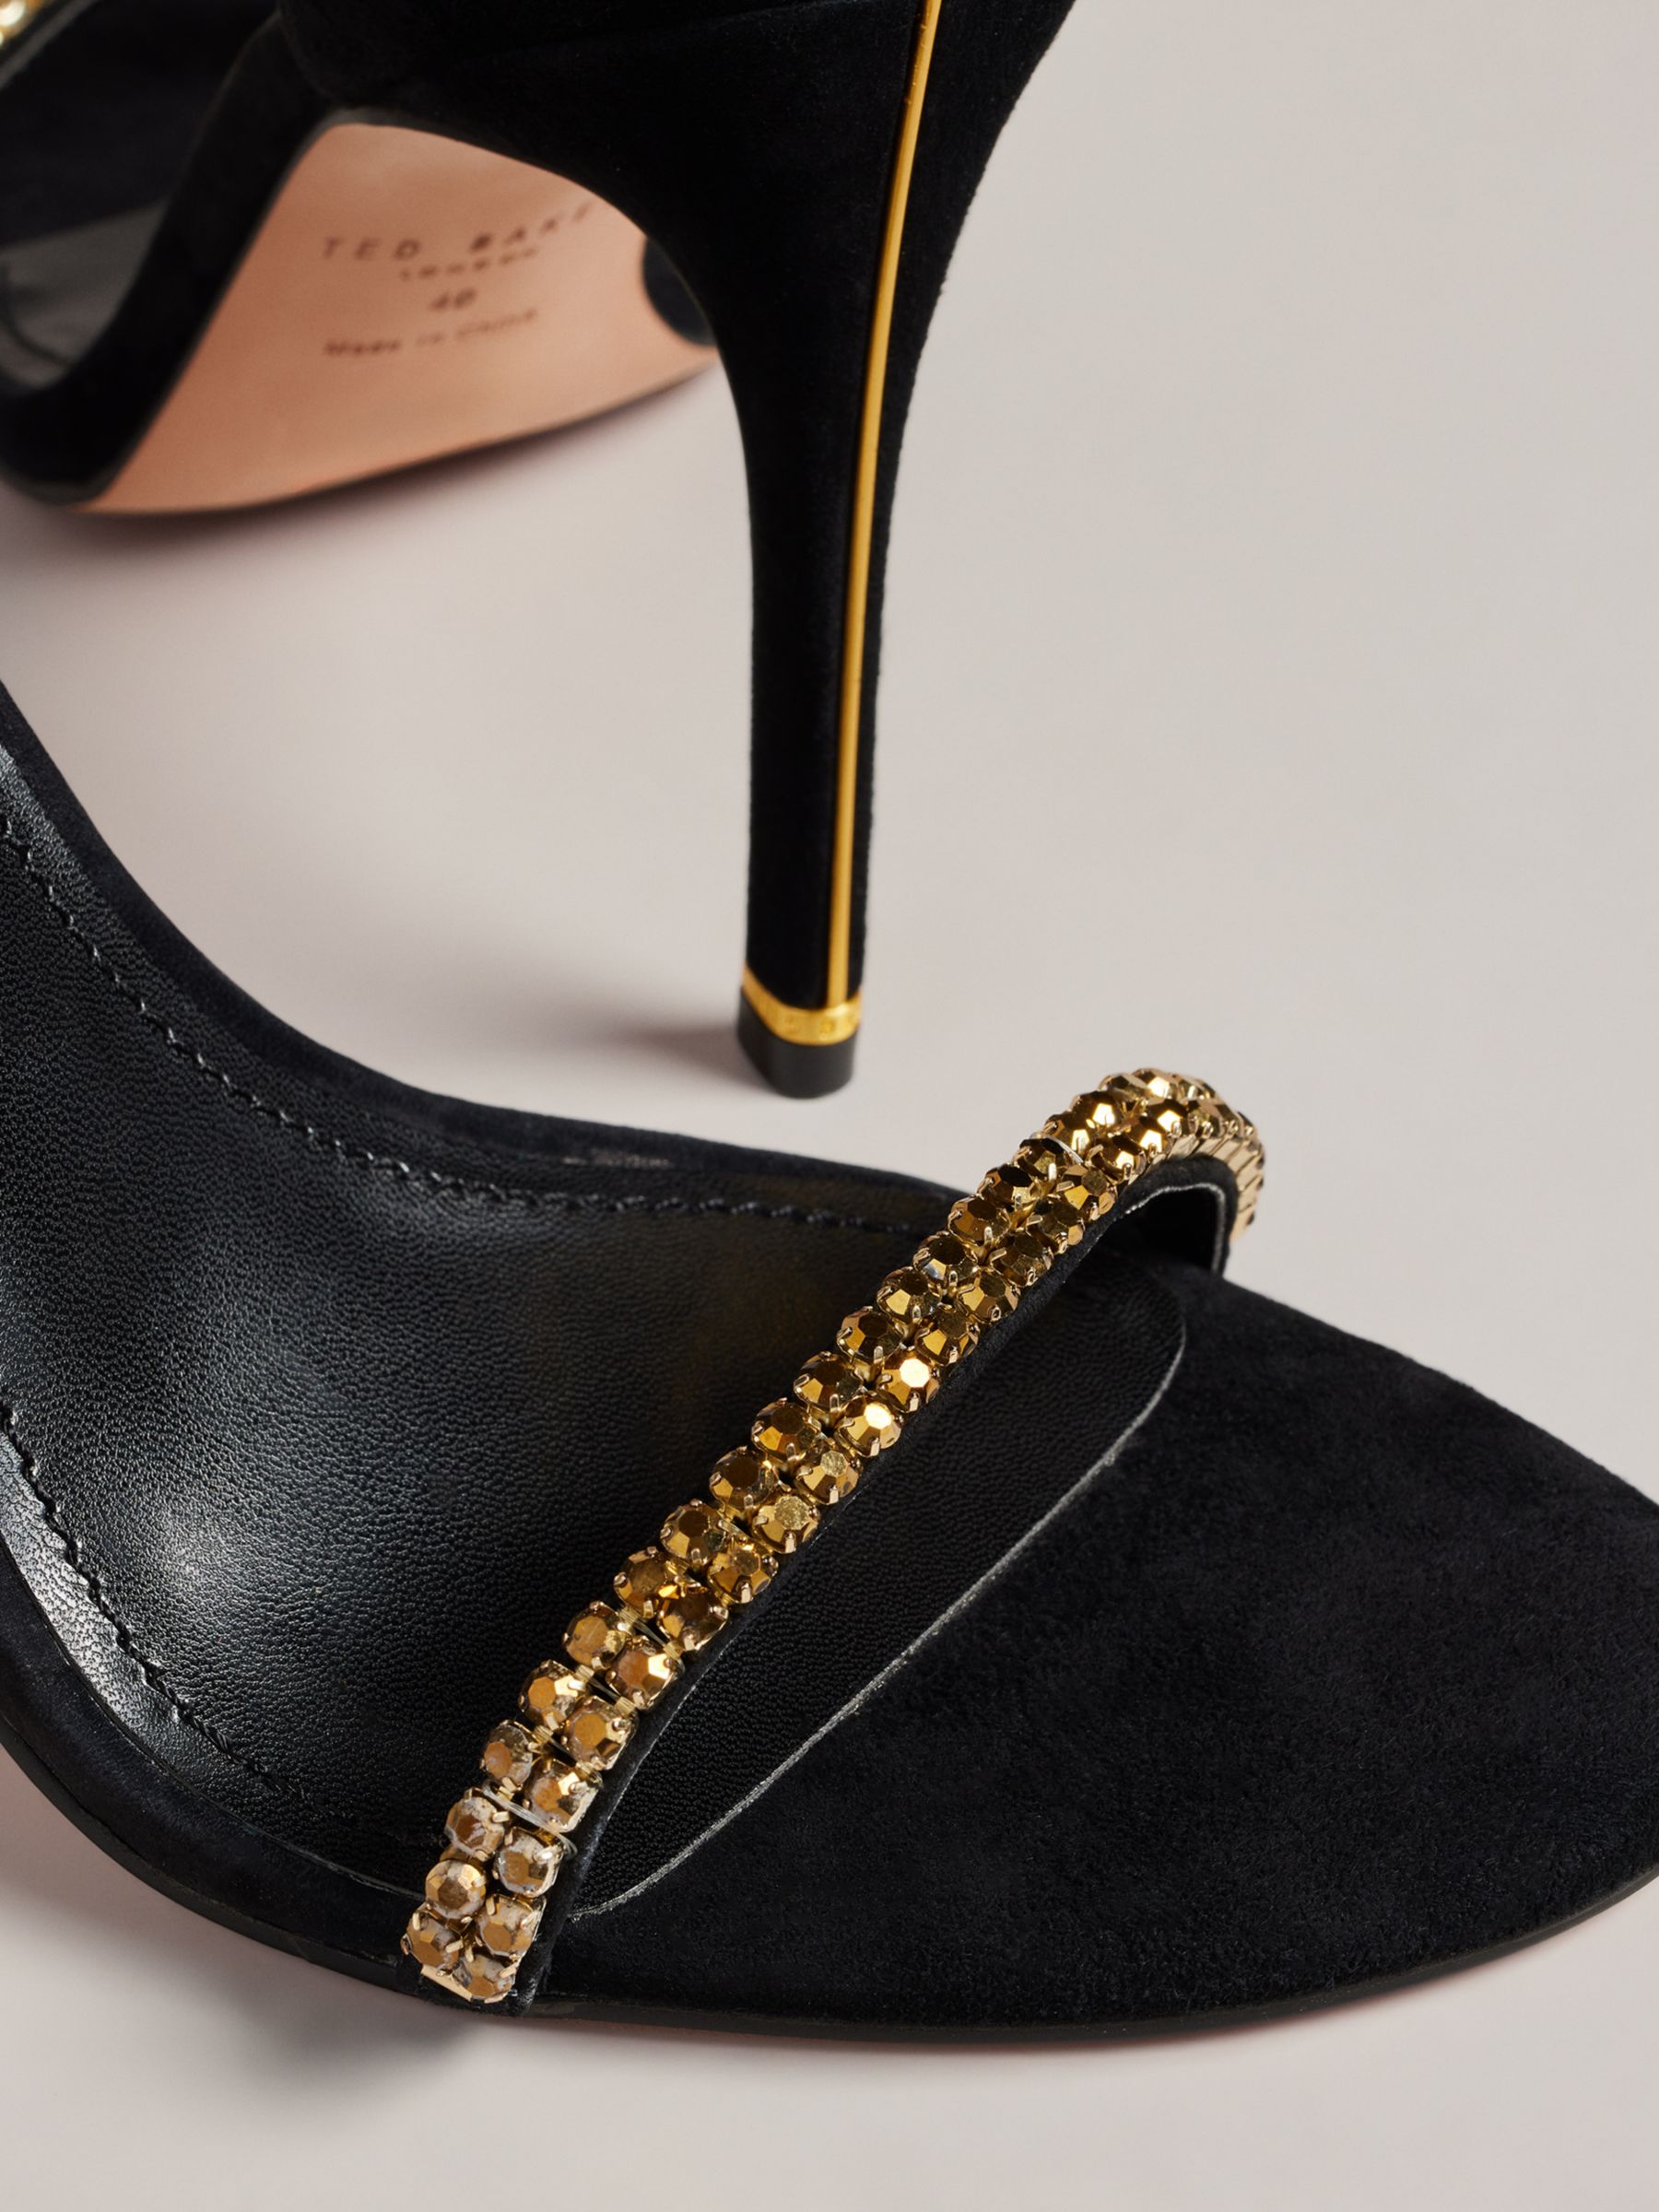 Ted Baker Helenni Leather Stiletto Heel Sandals, Black/Gold, EU38